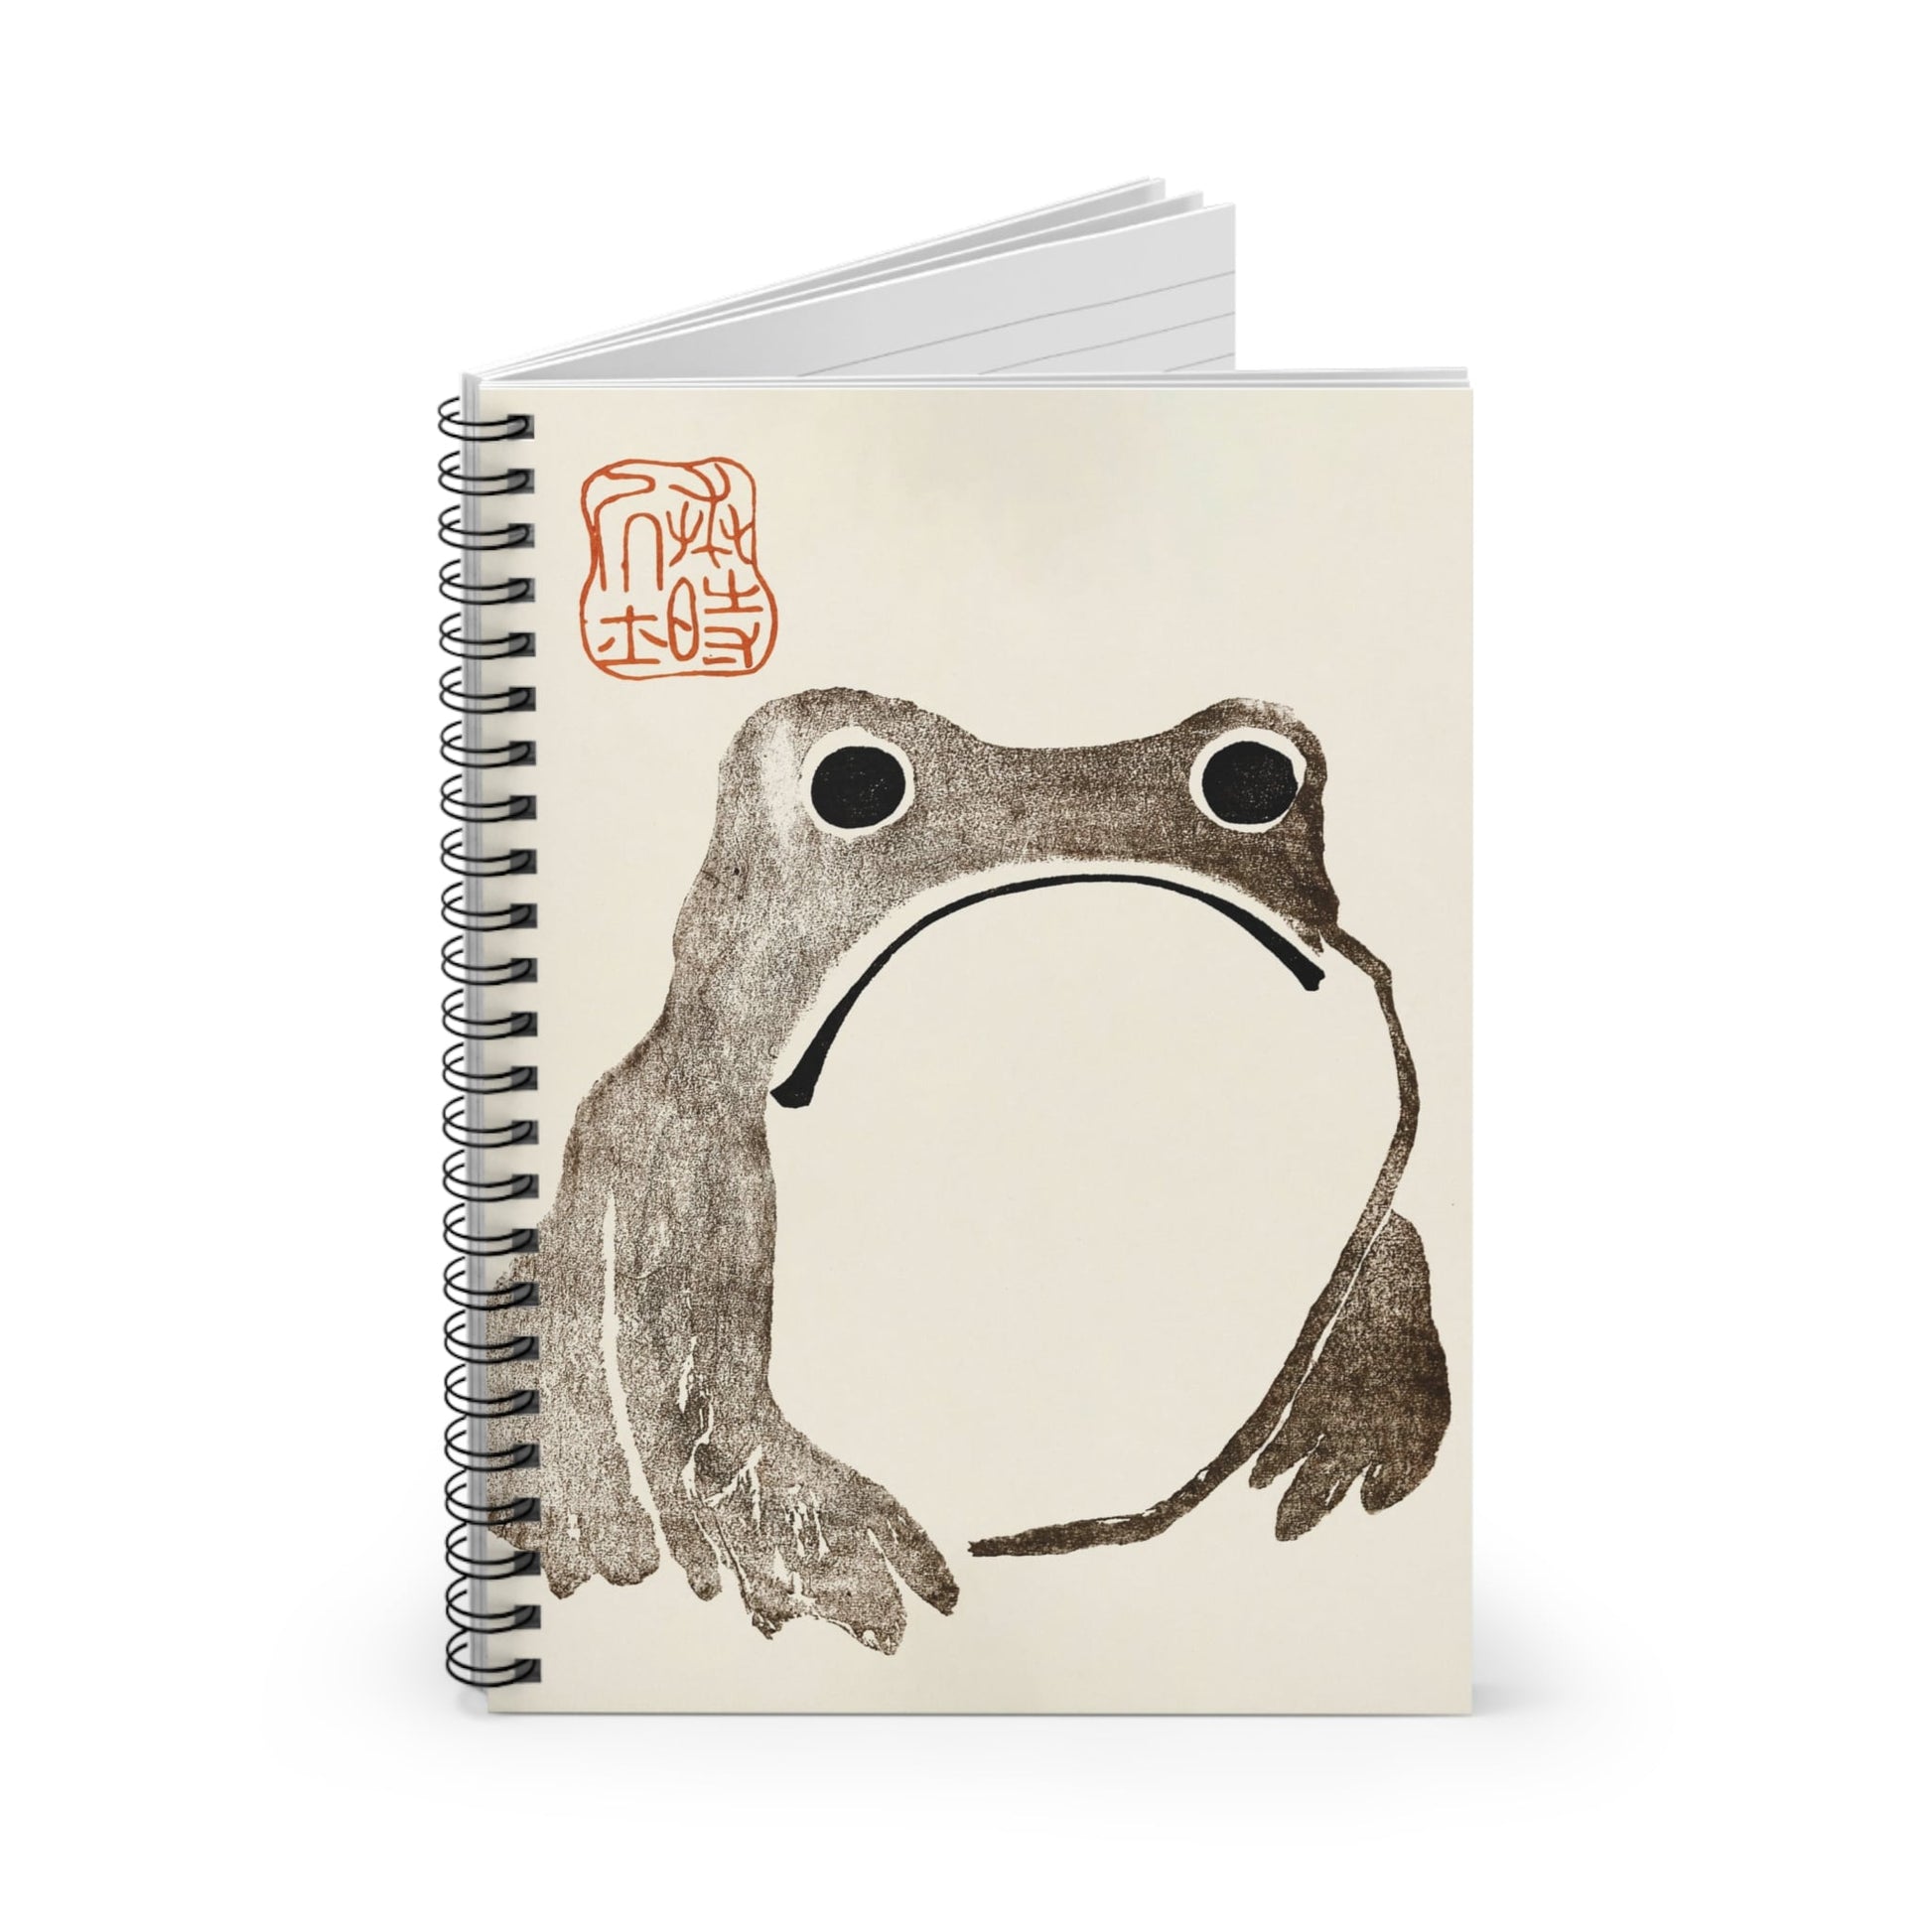 Grumpy Frog Spiral Notebook Standing up on White Desk